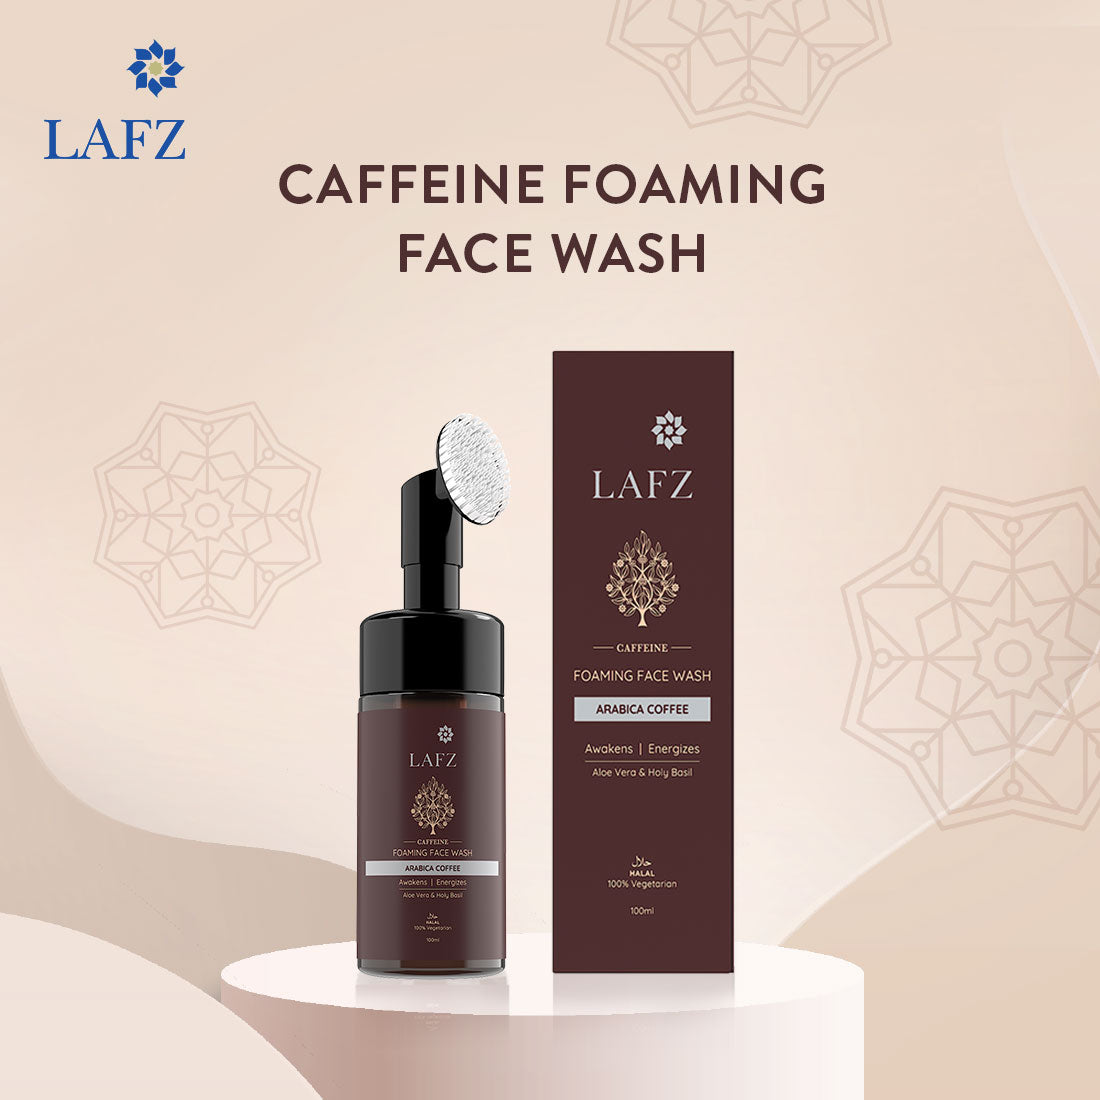 Lafz Foaming Face Wash India (100ml) - Caffeine